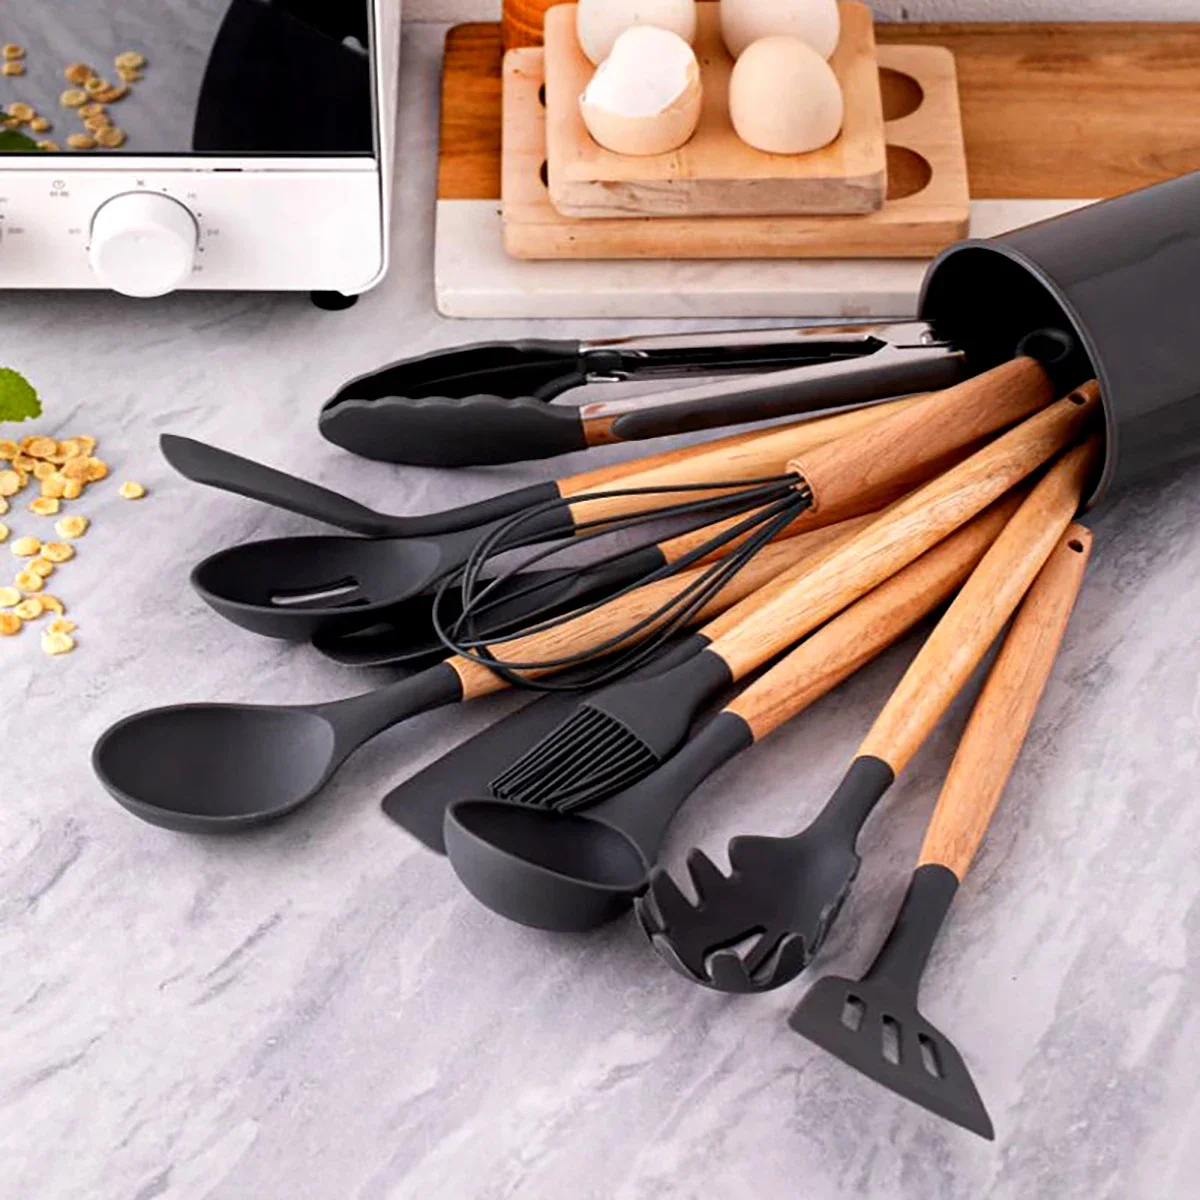 https://ae01.alicdn.com/kf/Sf17f46c5a65d40049848efa121206137i/14PCS-Silicone-Kitchenware-Cooking-Utensils-Set-Heat-Resistant-Kitchen-Measuring-Spoons-Utensils-Baking-Tools-With-Storage.jpg